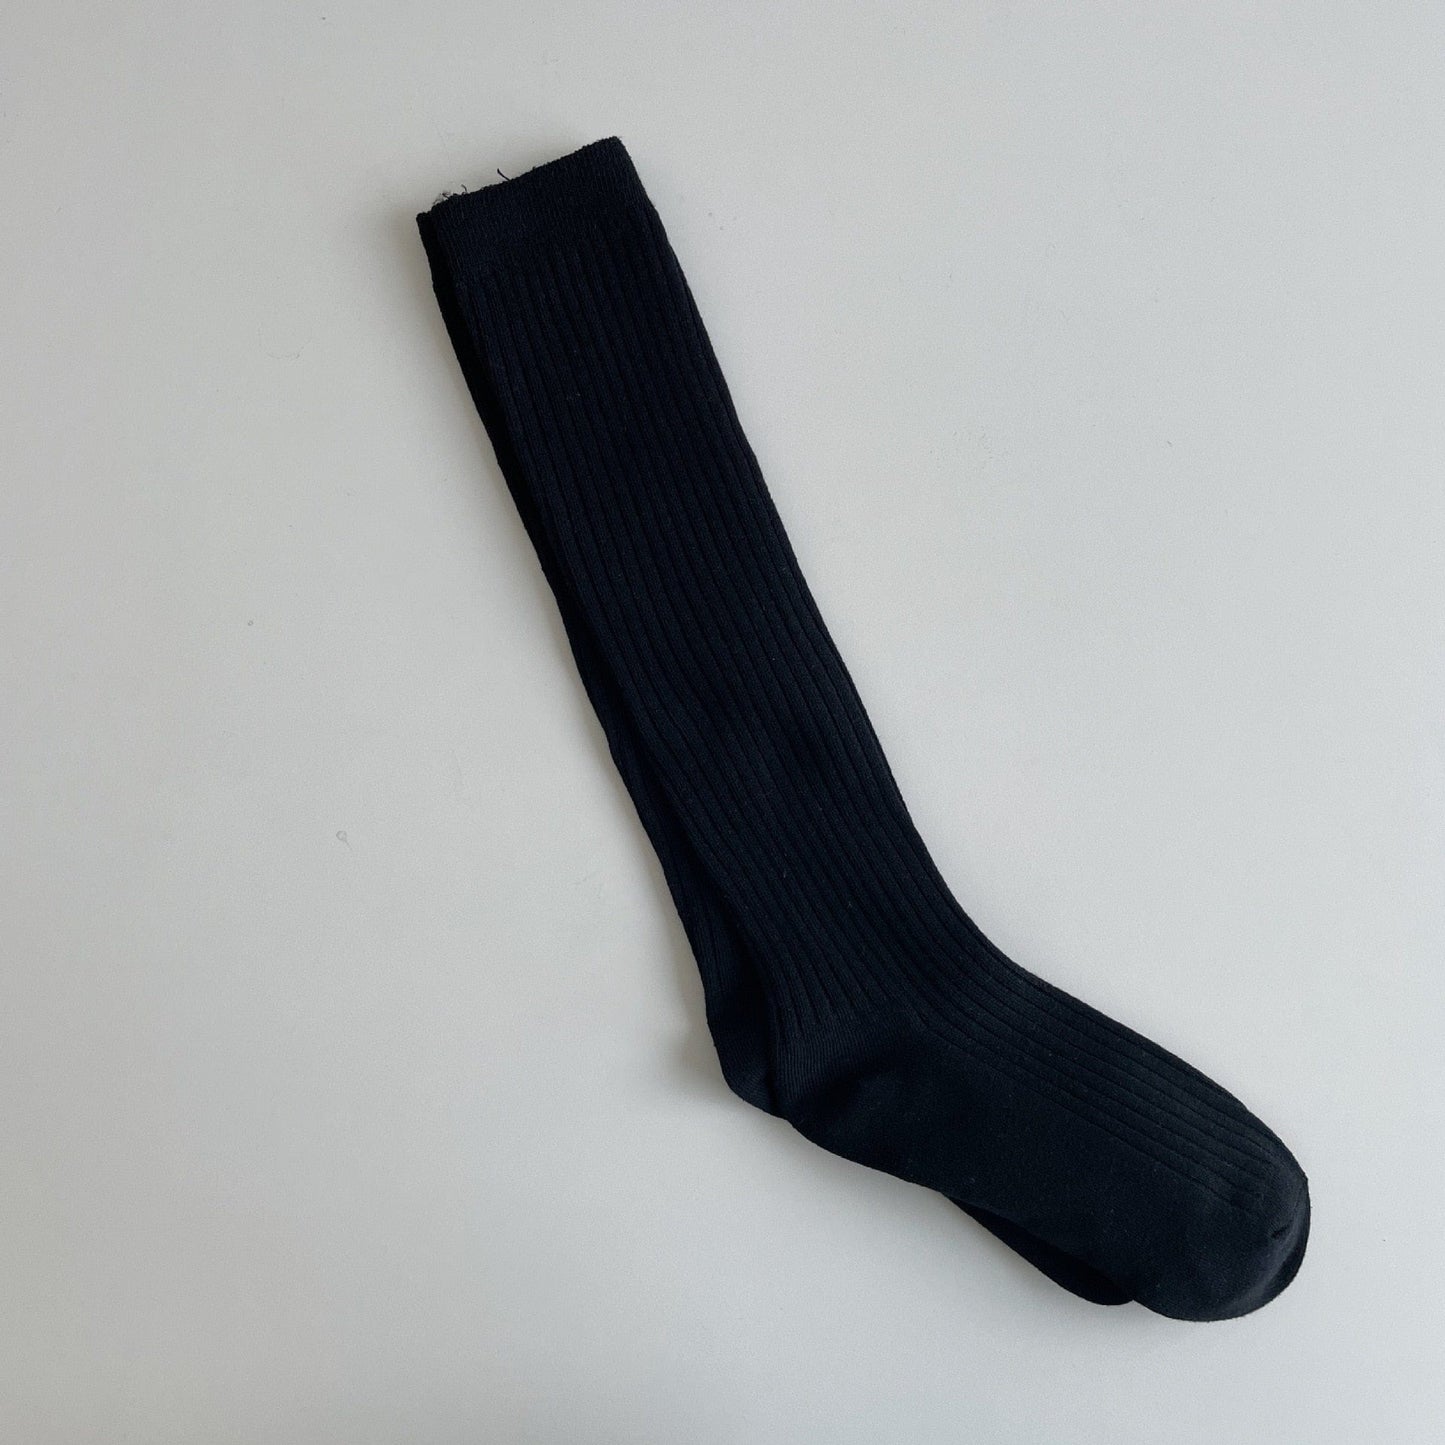 Kinky Cloth Black / EUR 34-39 Knitting Cotton Long Socks